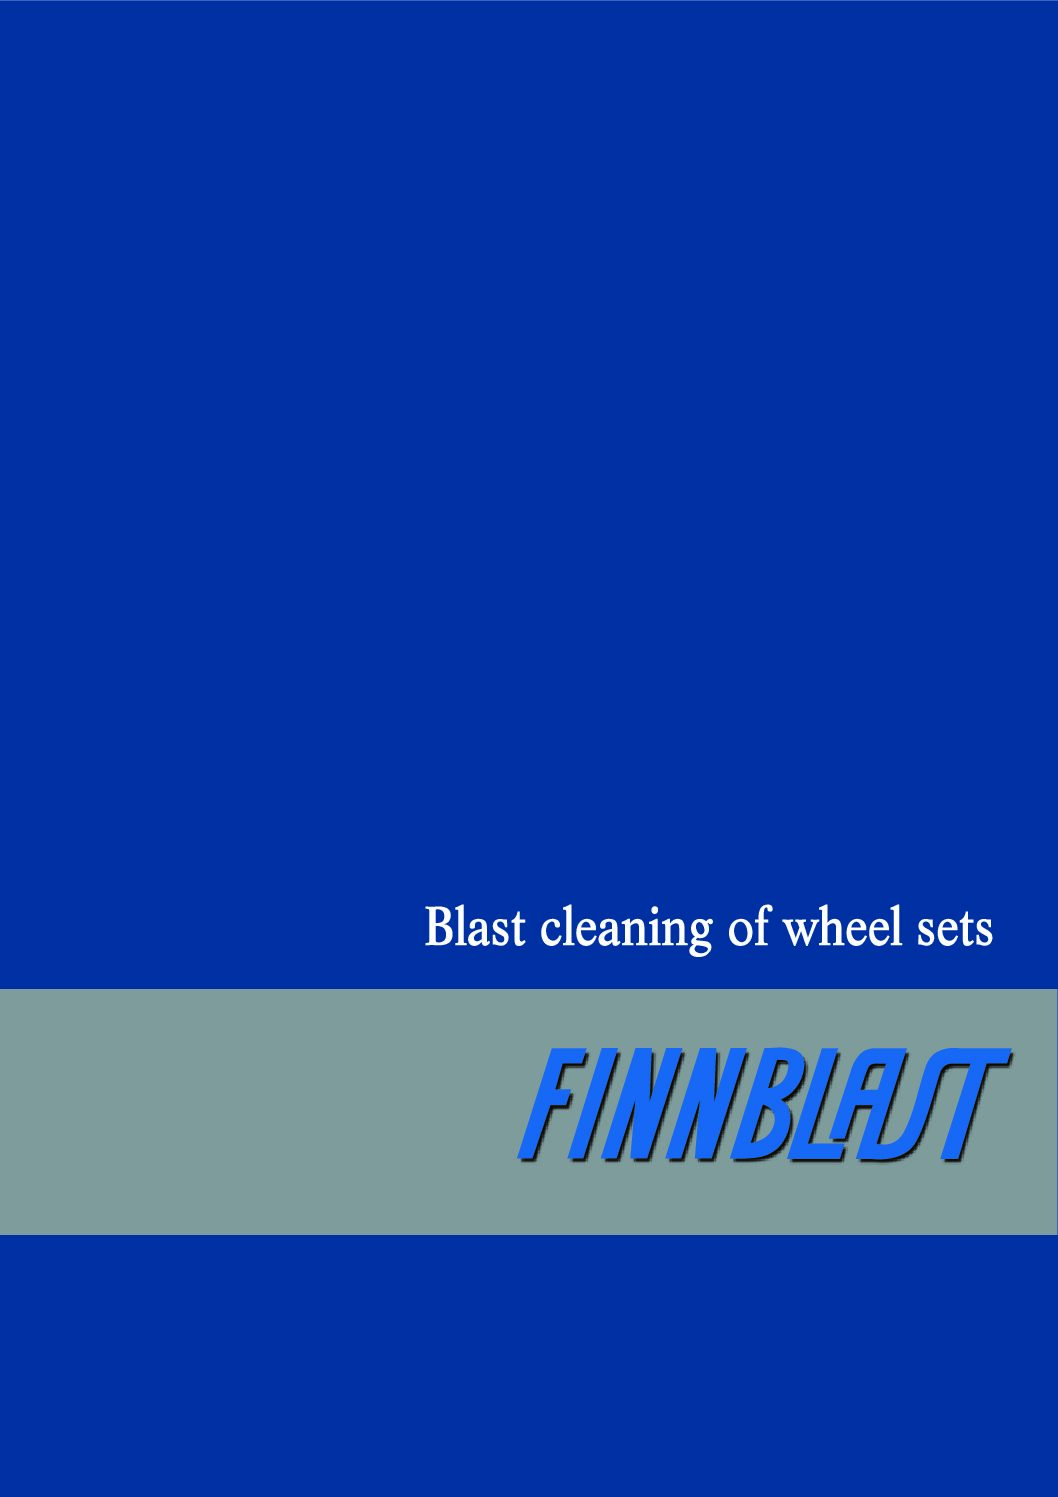 Finnblast Oy – Blast Cleaning of Wheel Sets